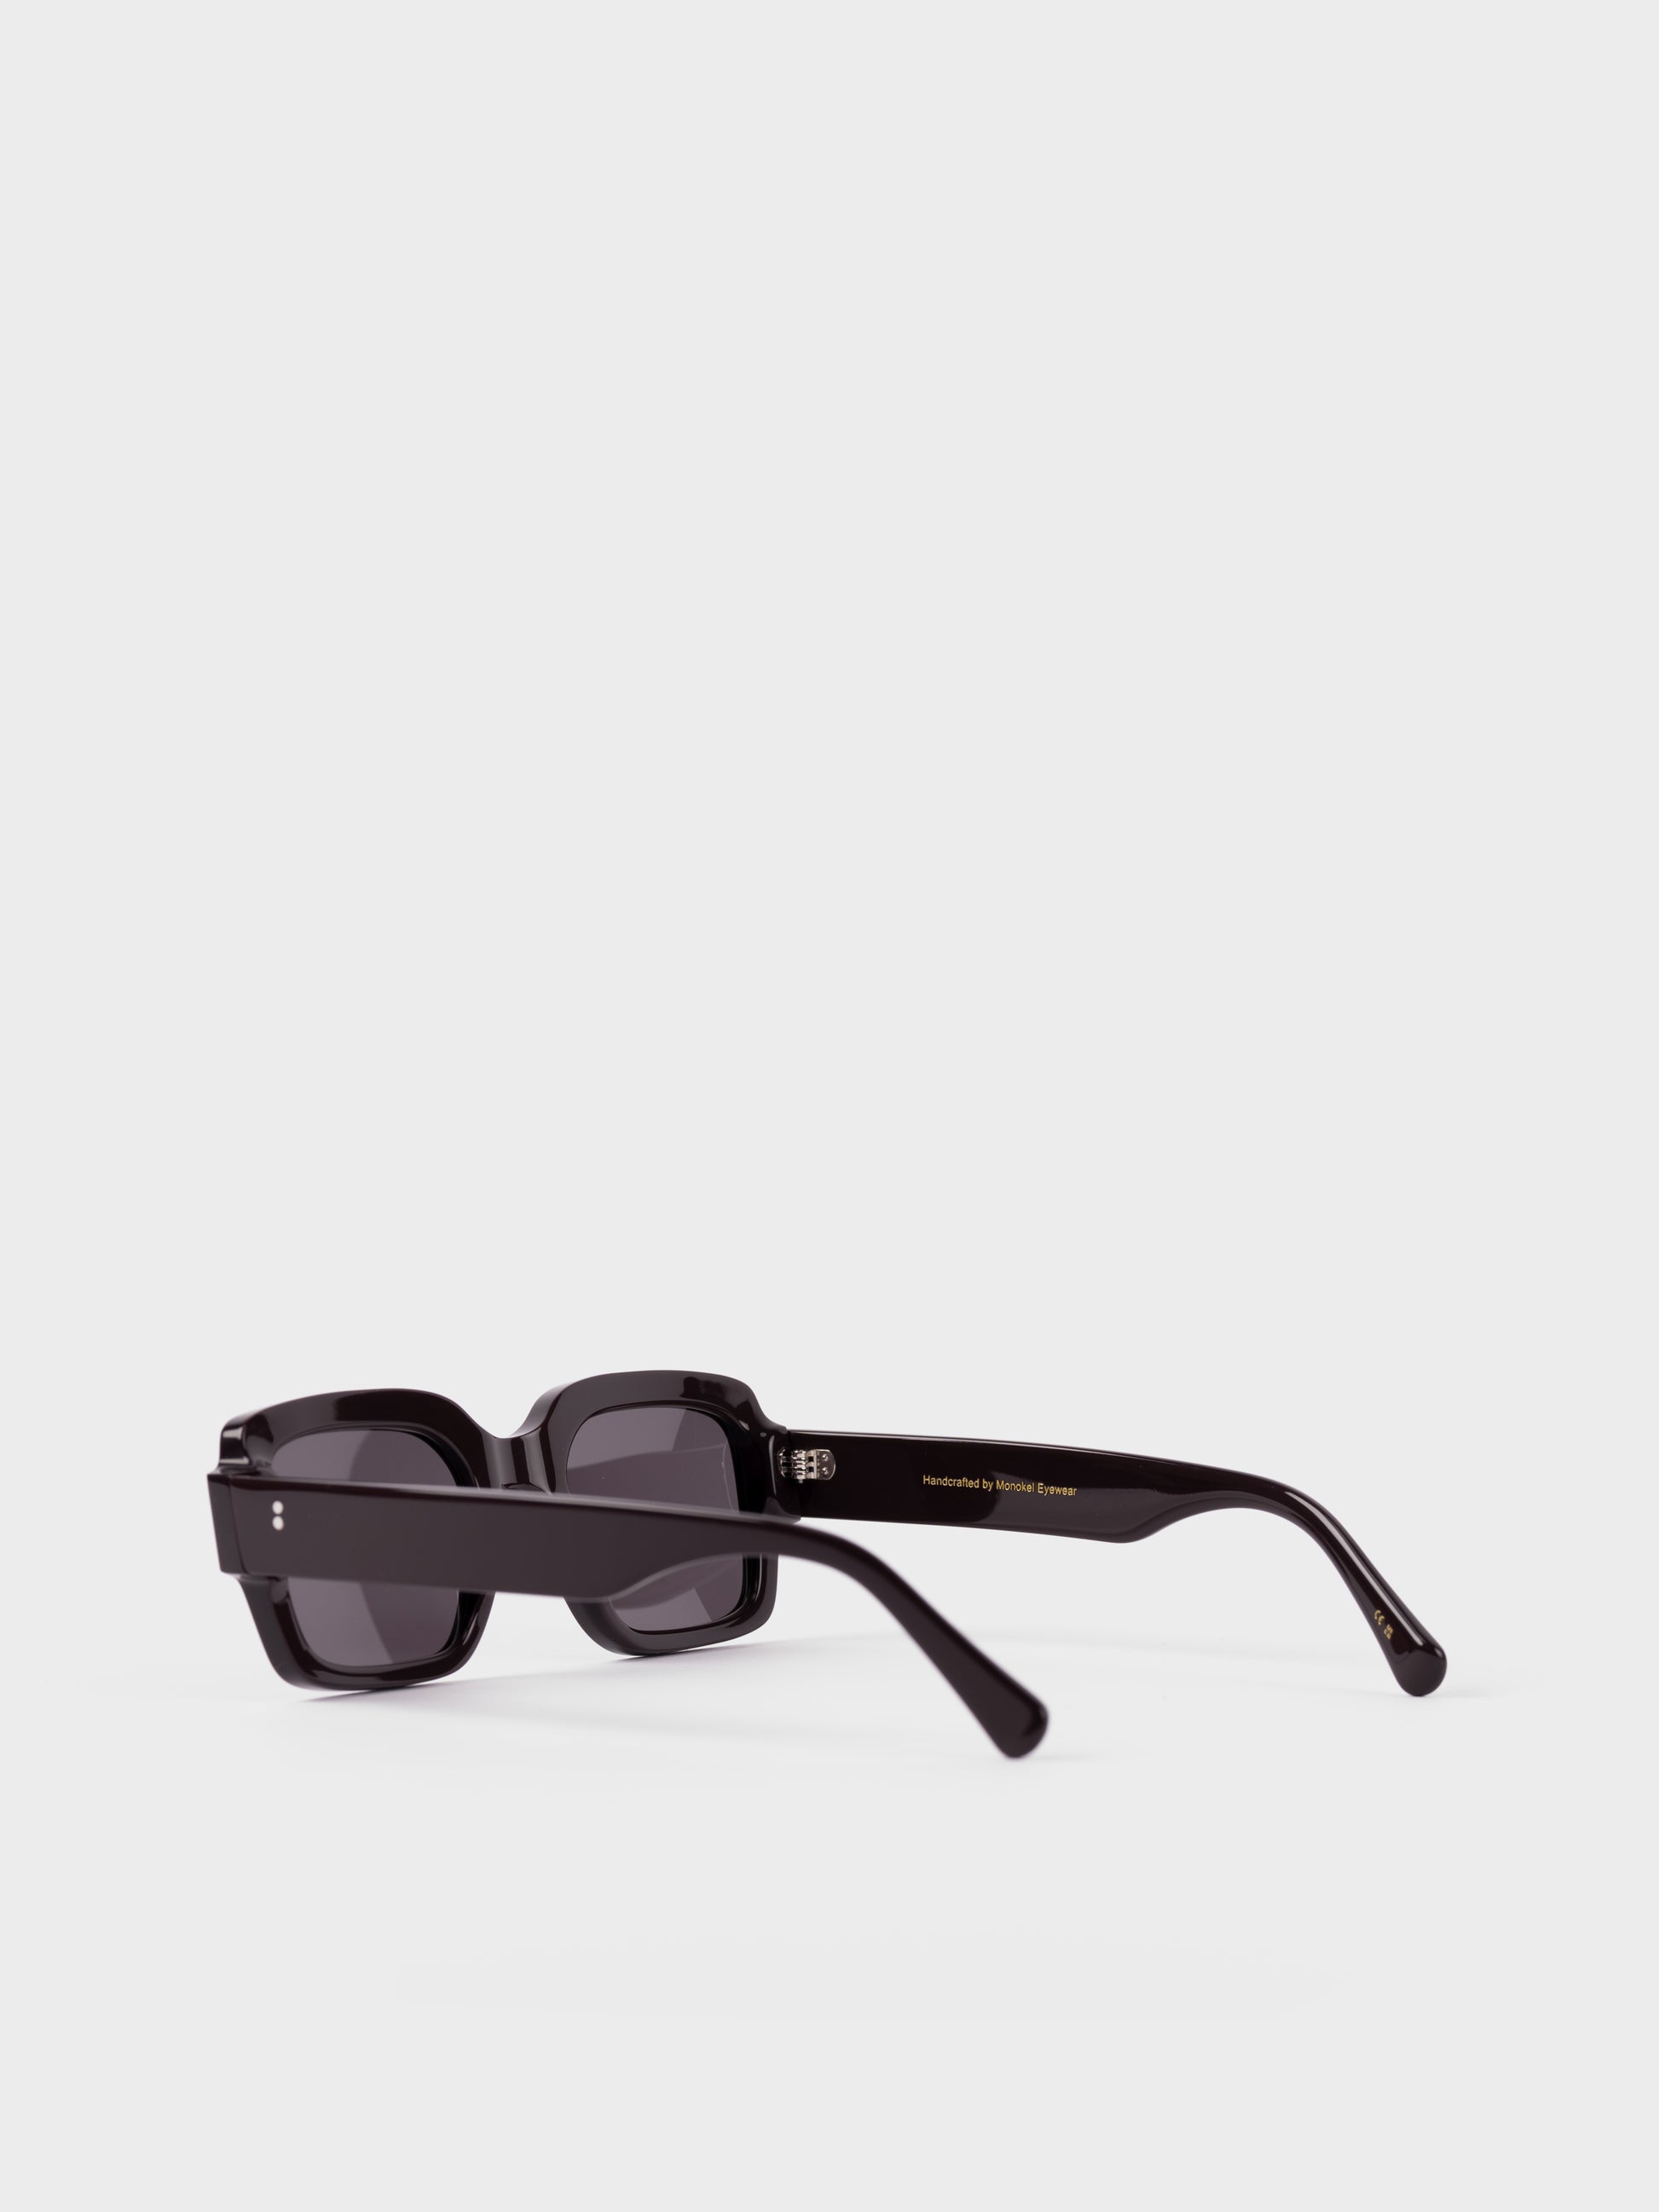 Monokel Sunglasses - Apollo Chocolate/Grey Lens